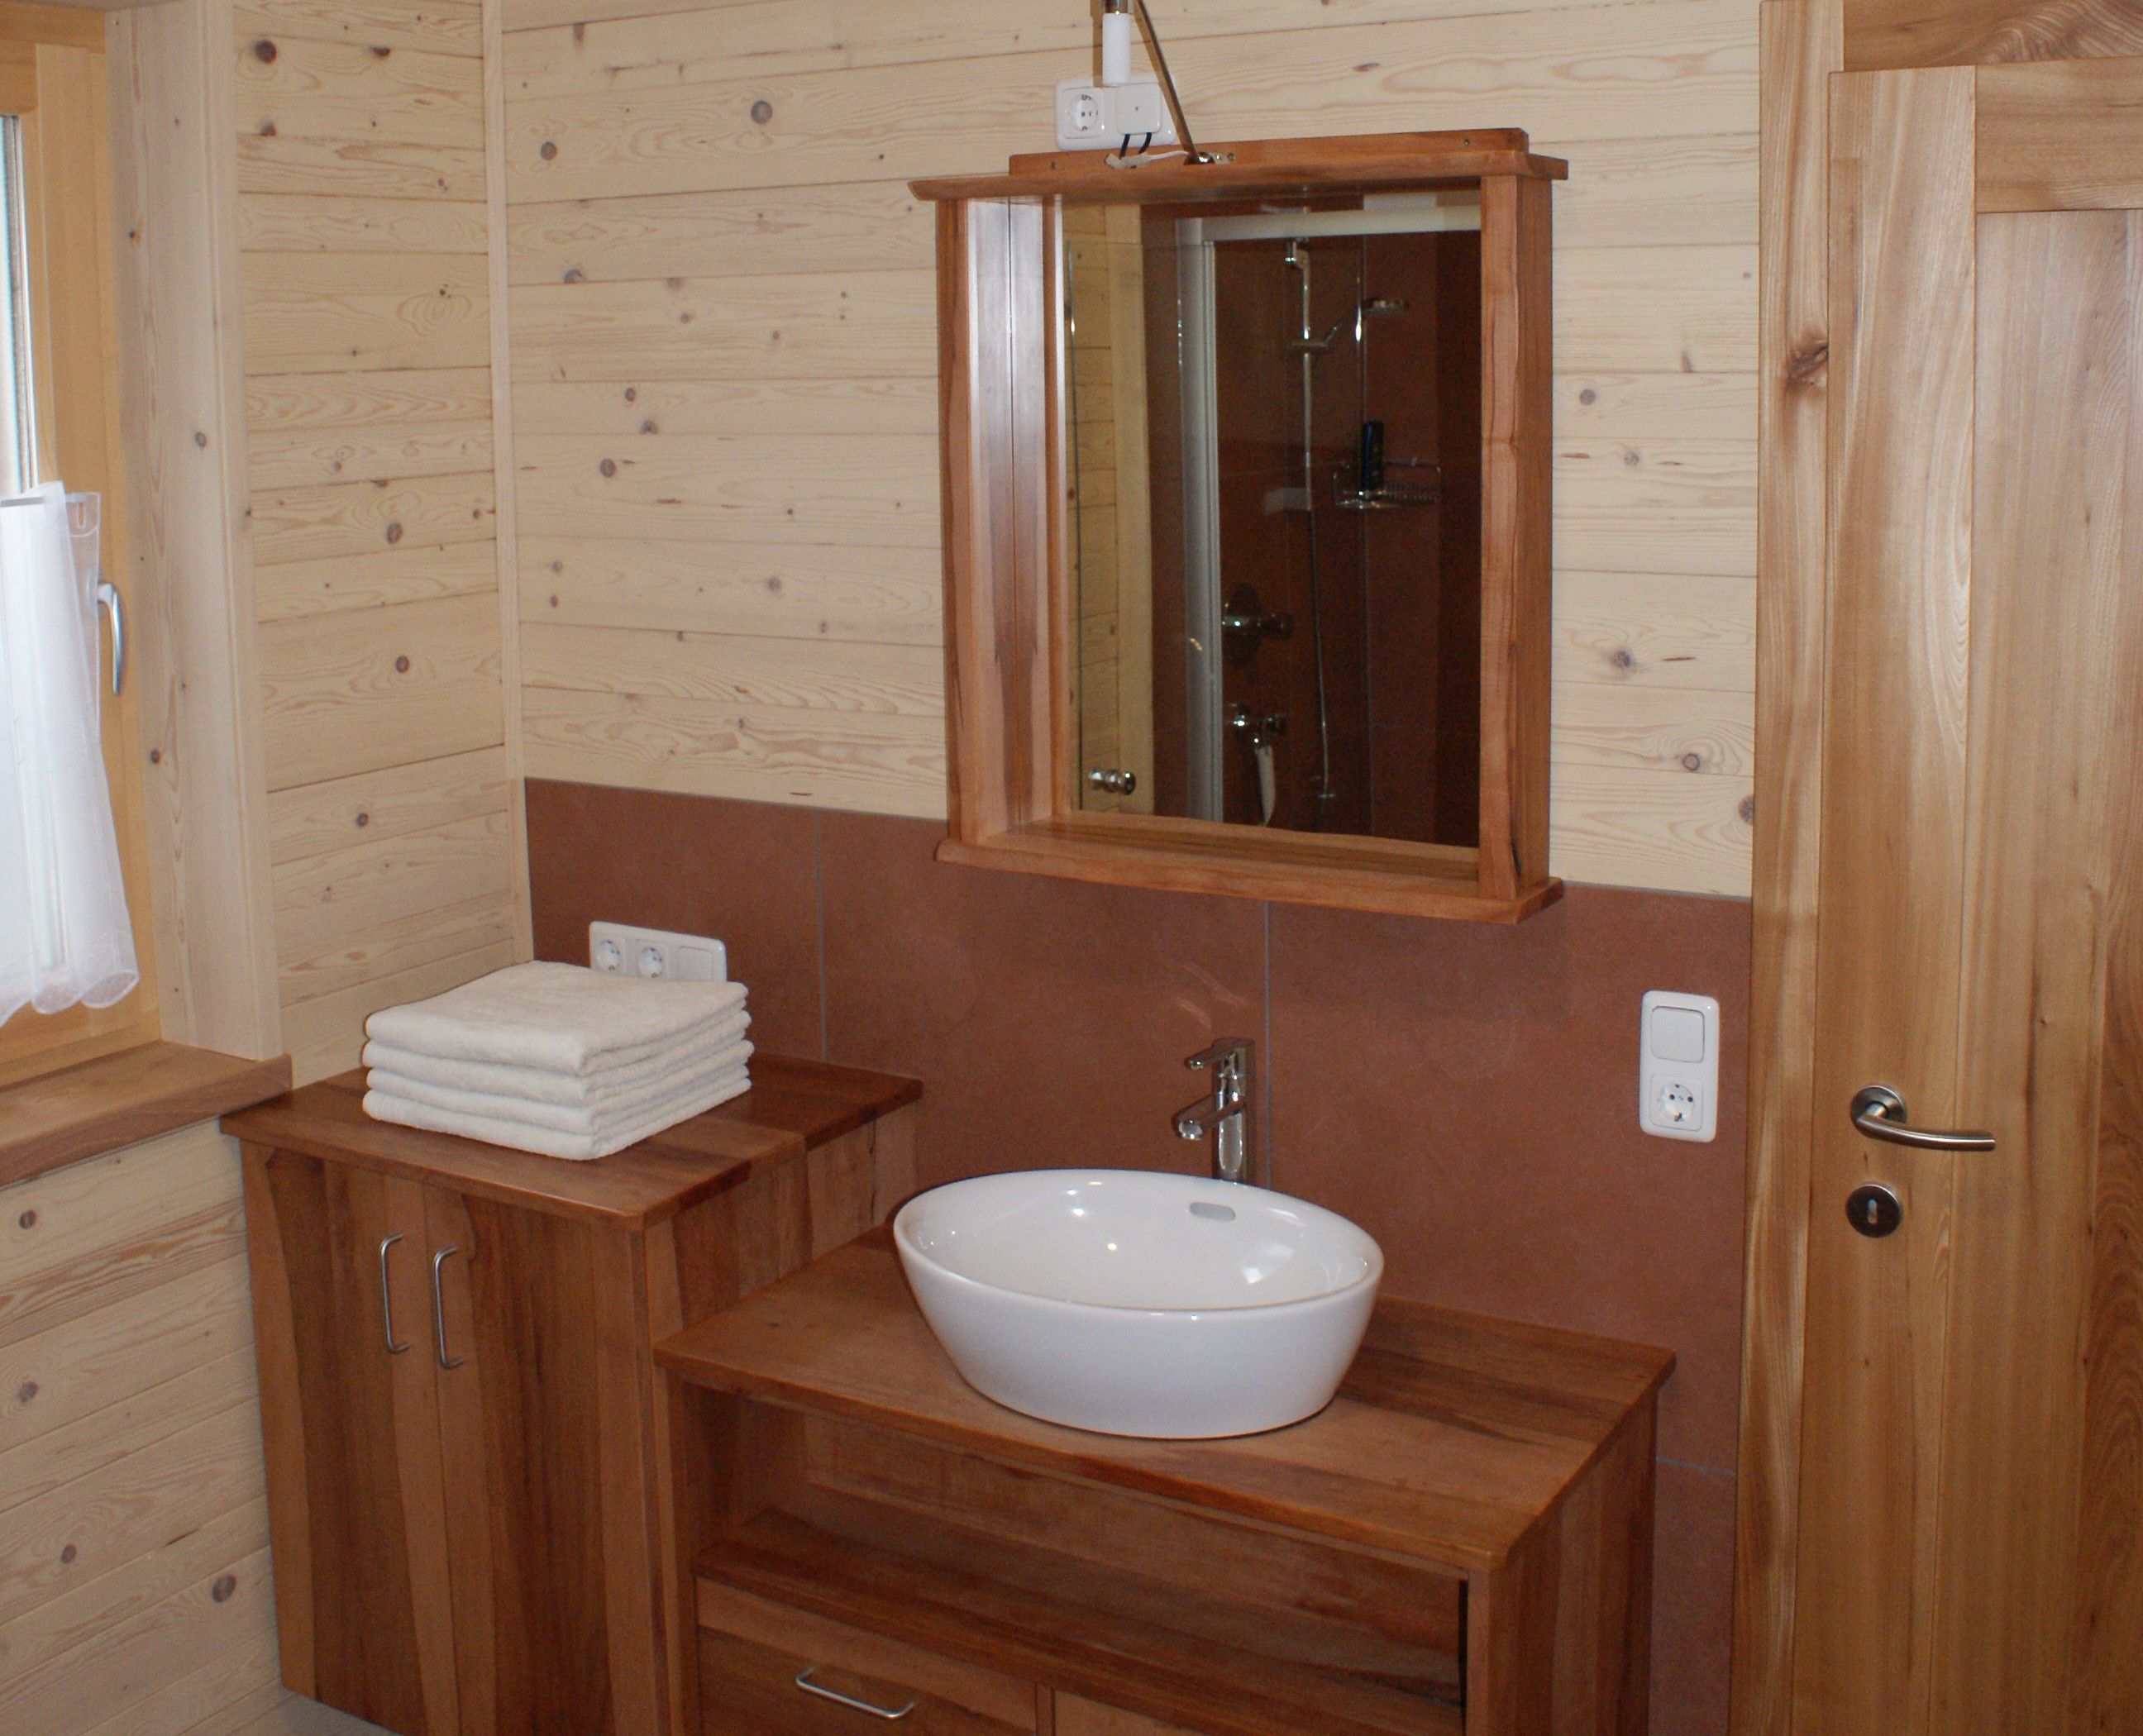 Bathroom furniture from regional wood